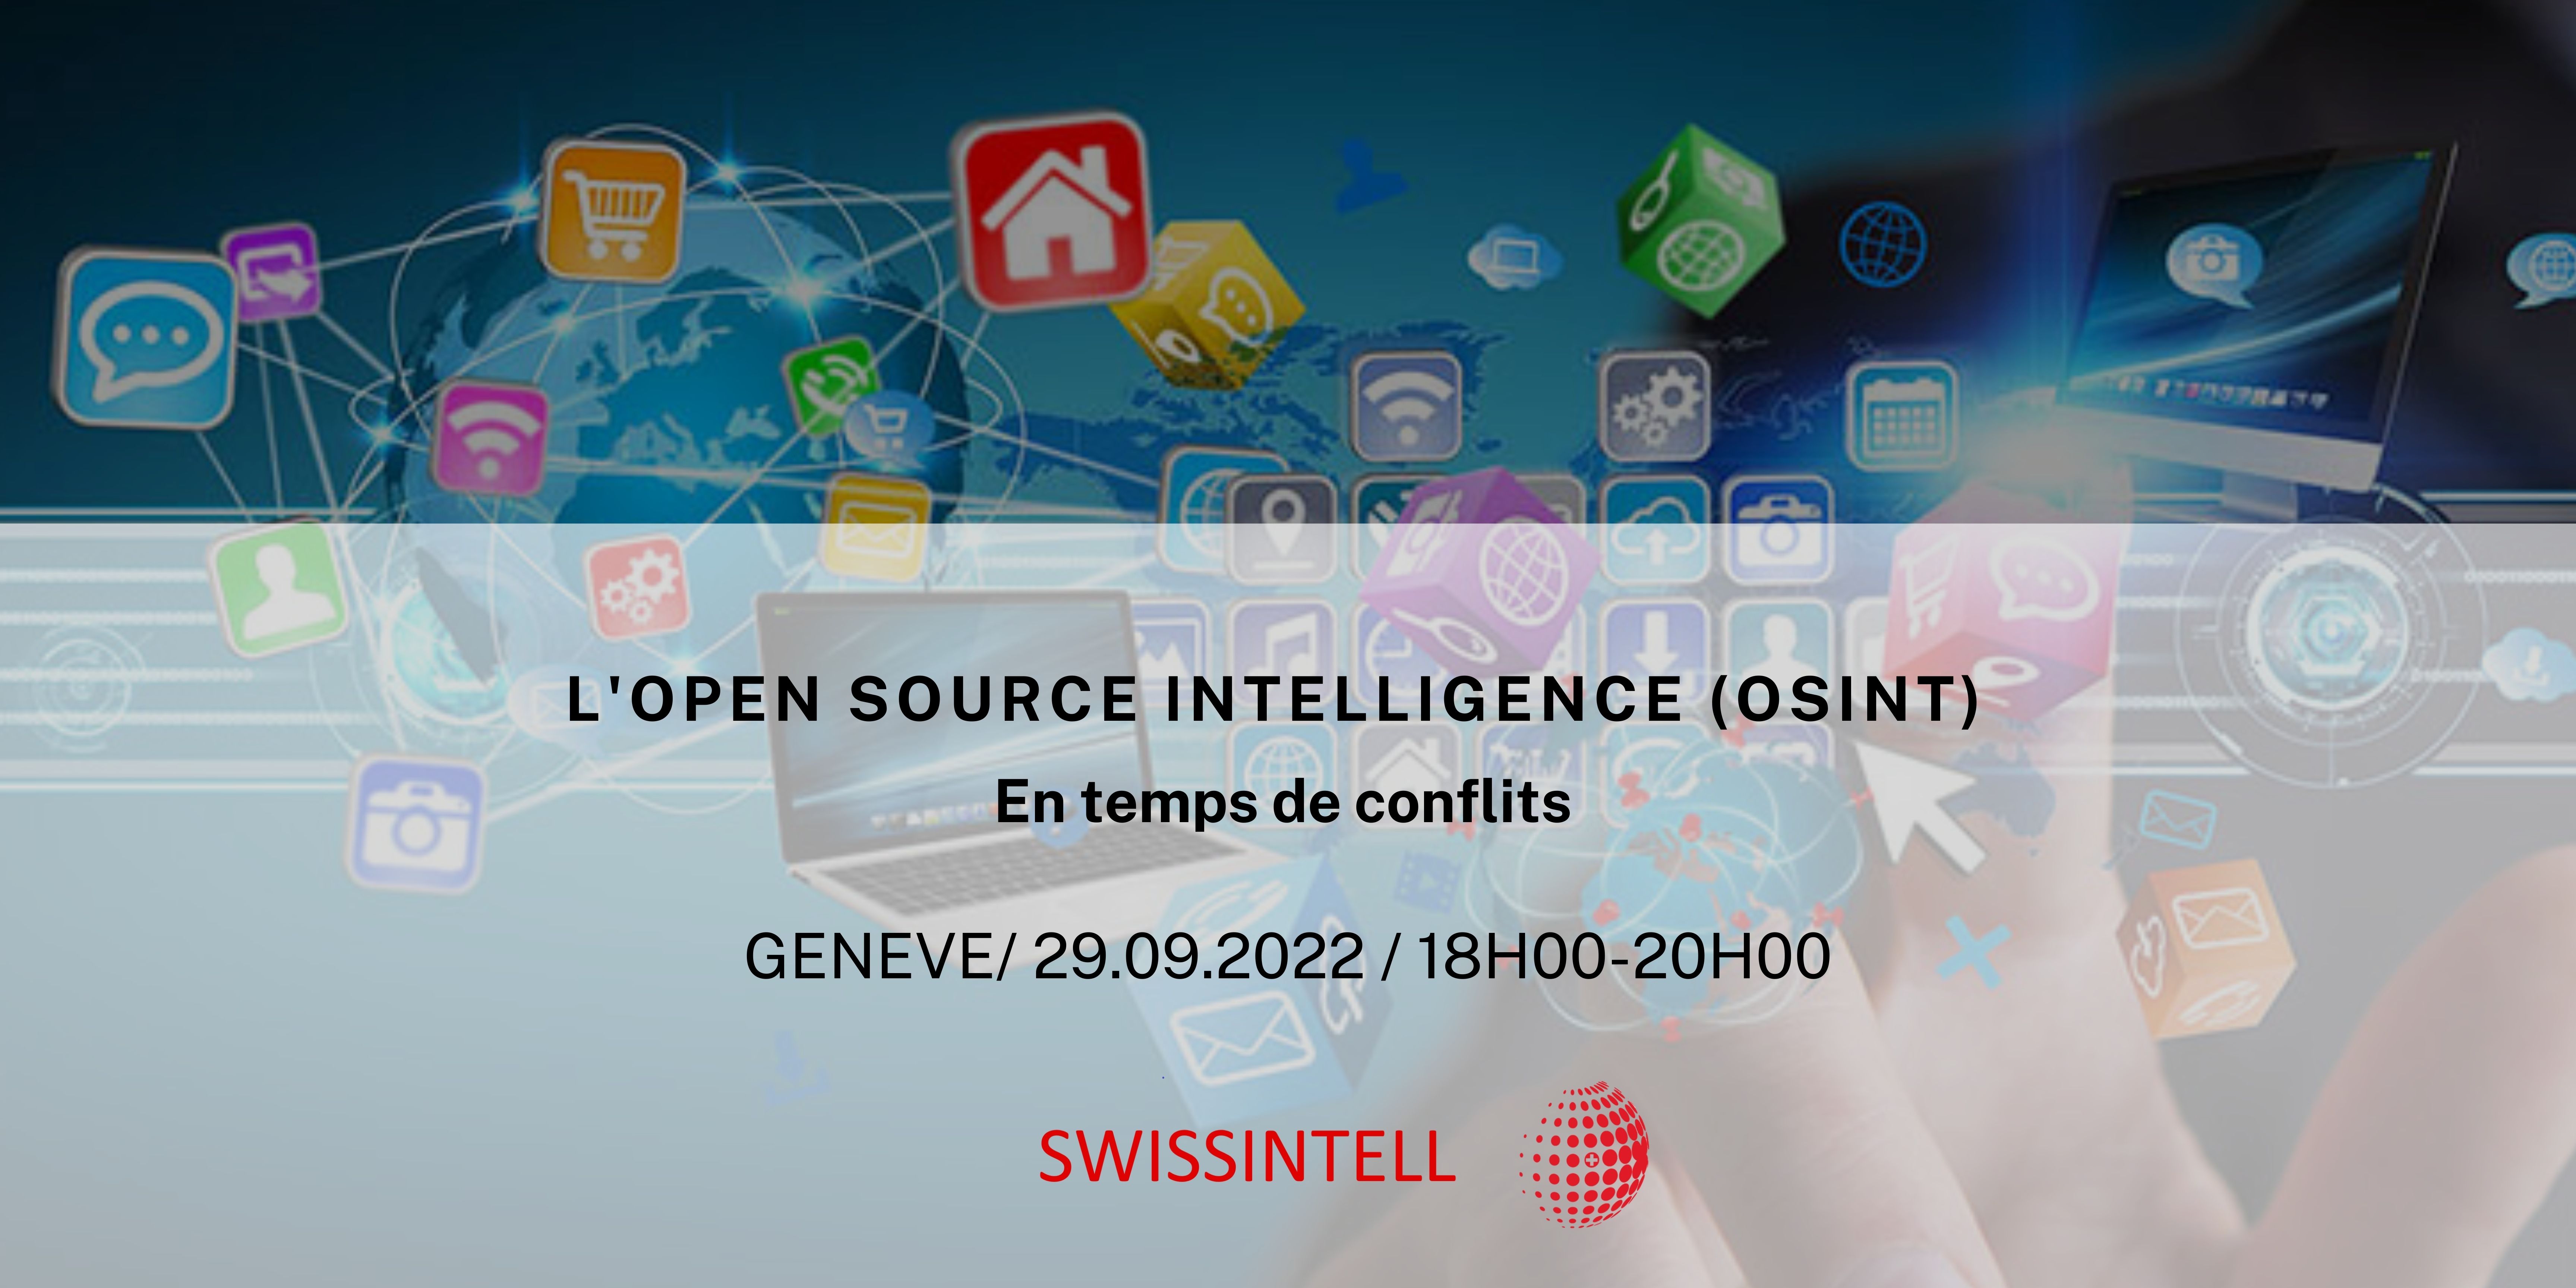 Swissintell - Conférence 28.4.22